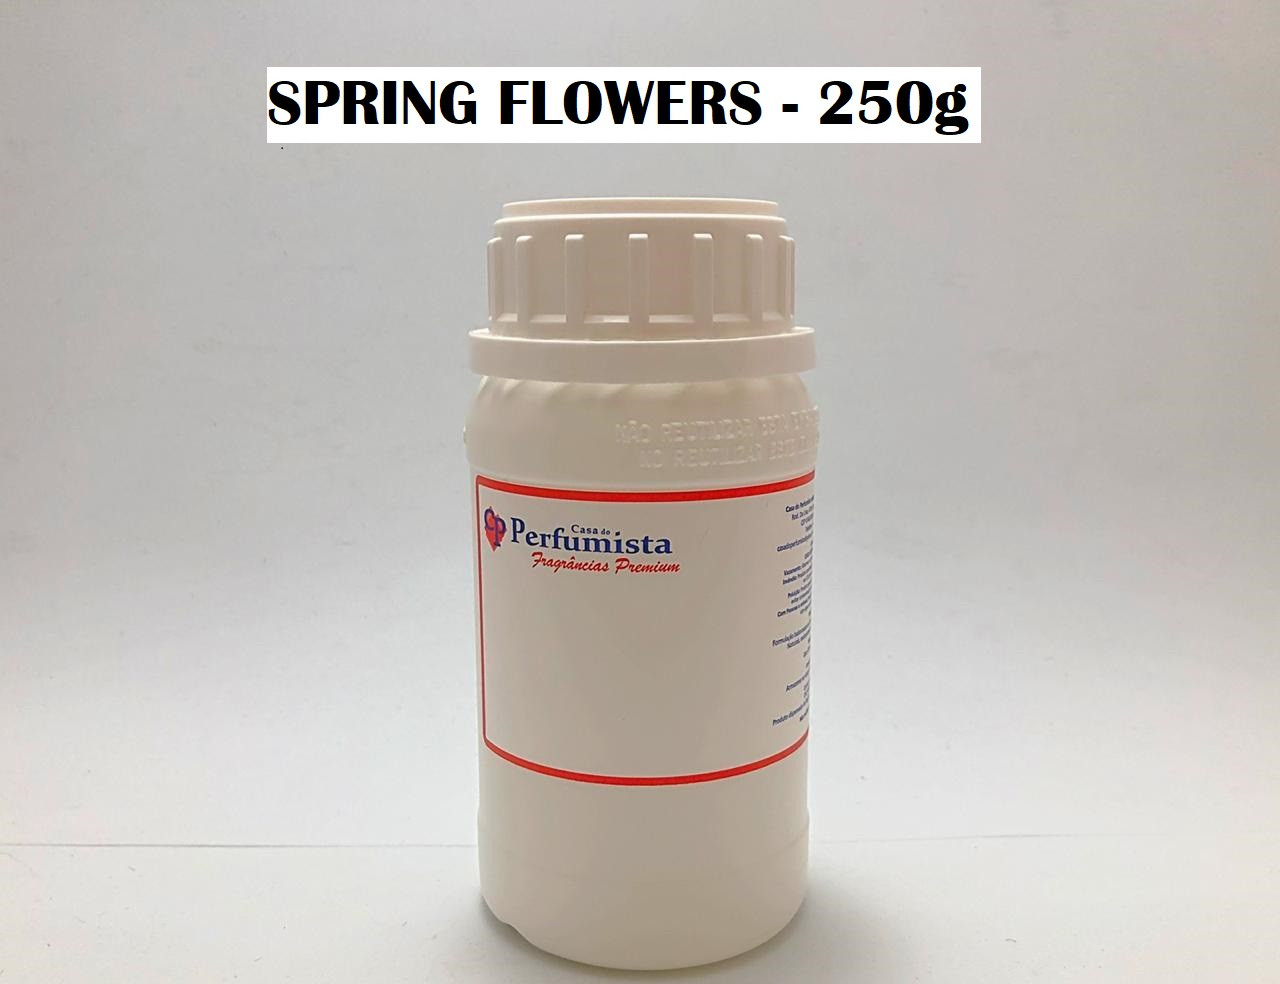 SPRING FLOWERS - 250g